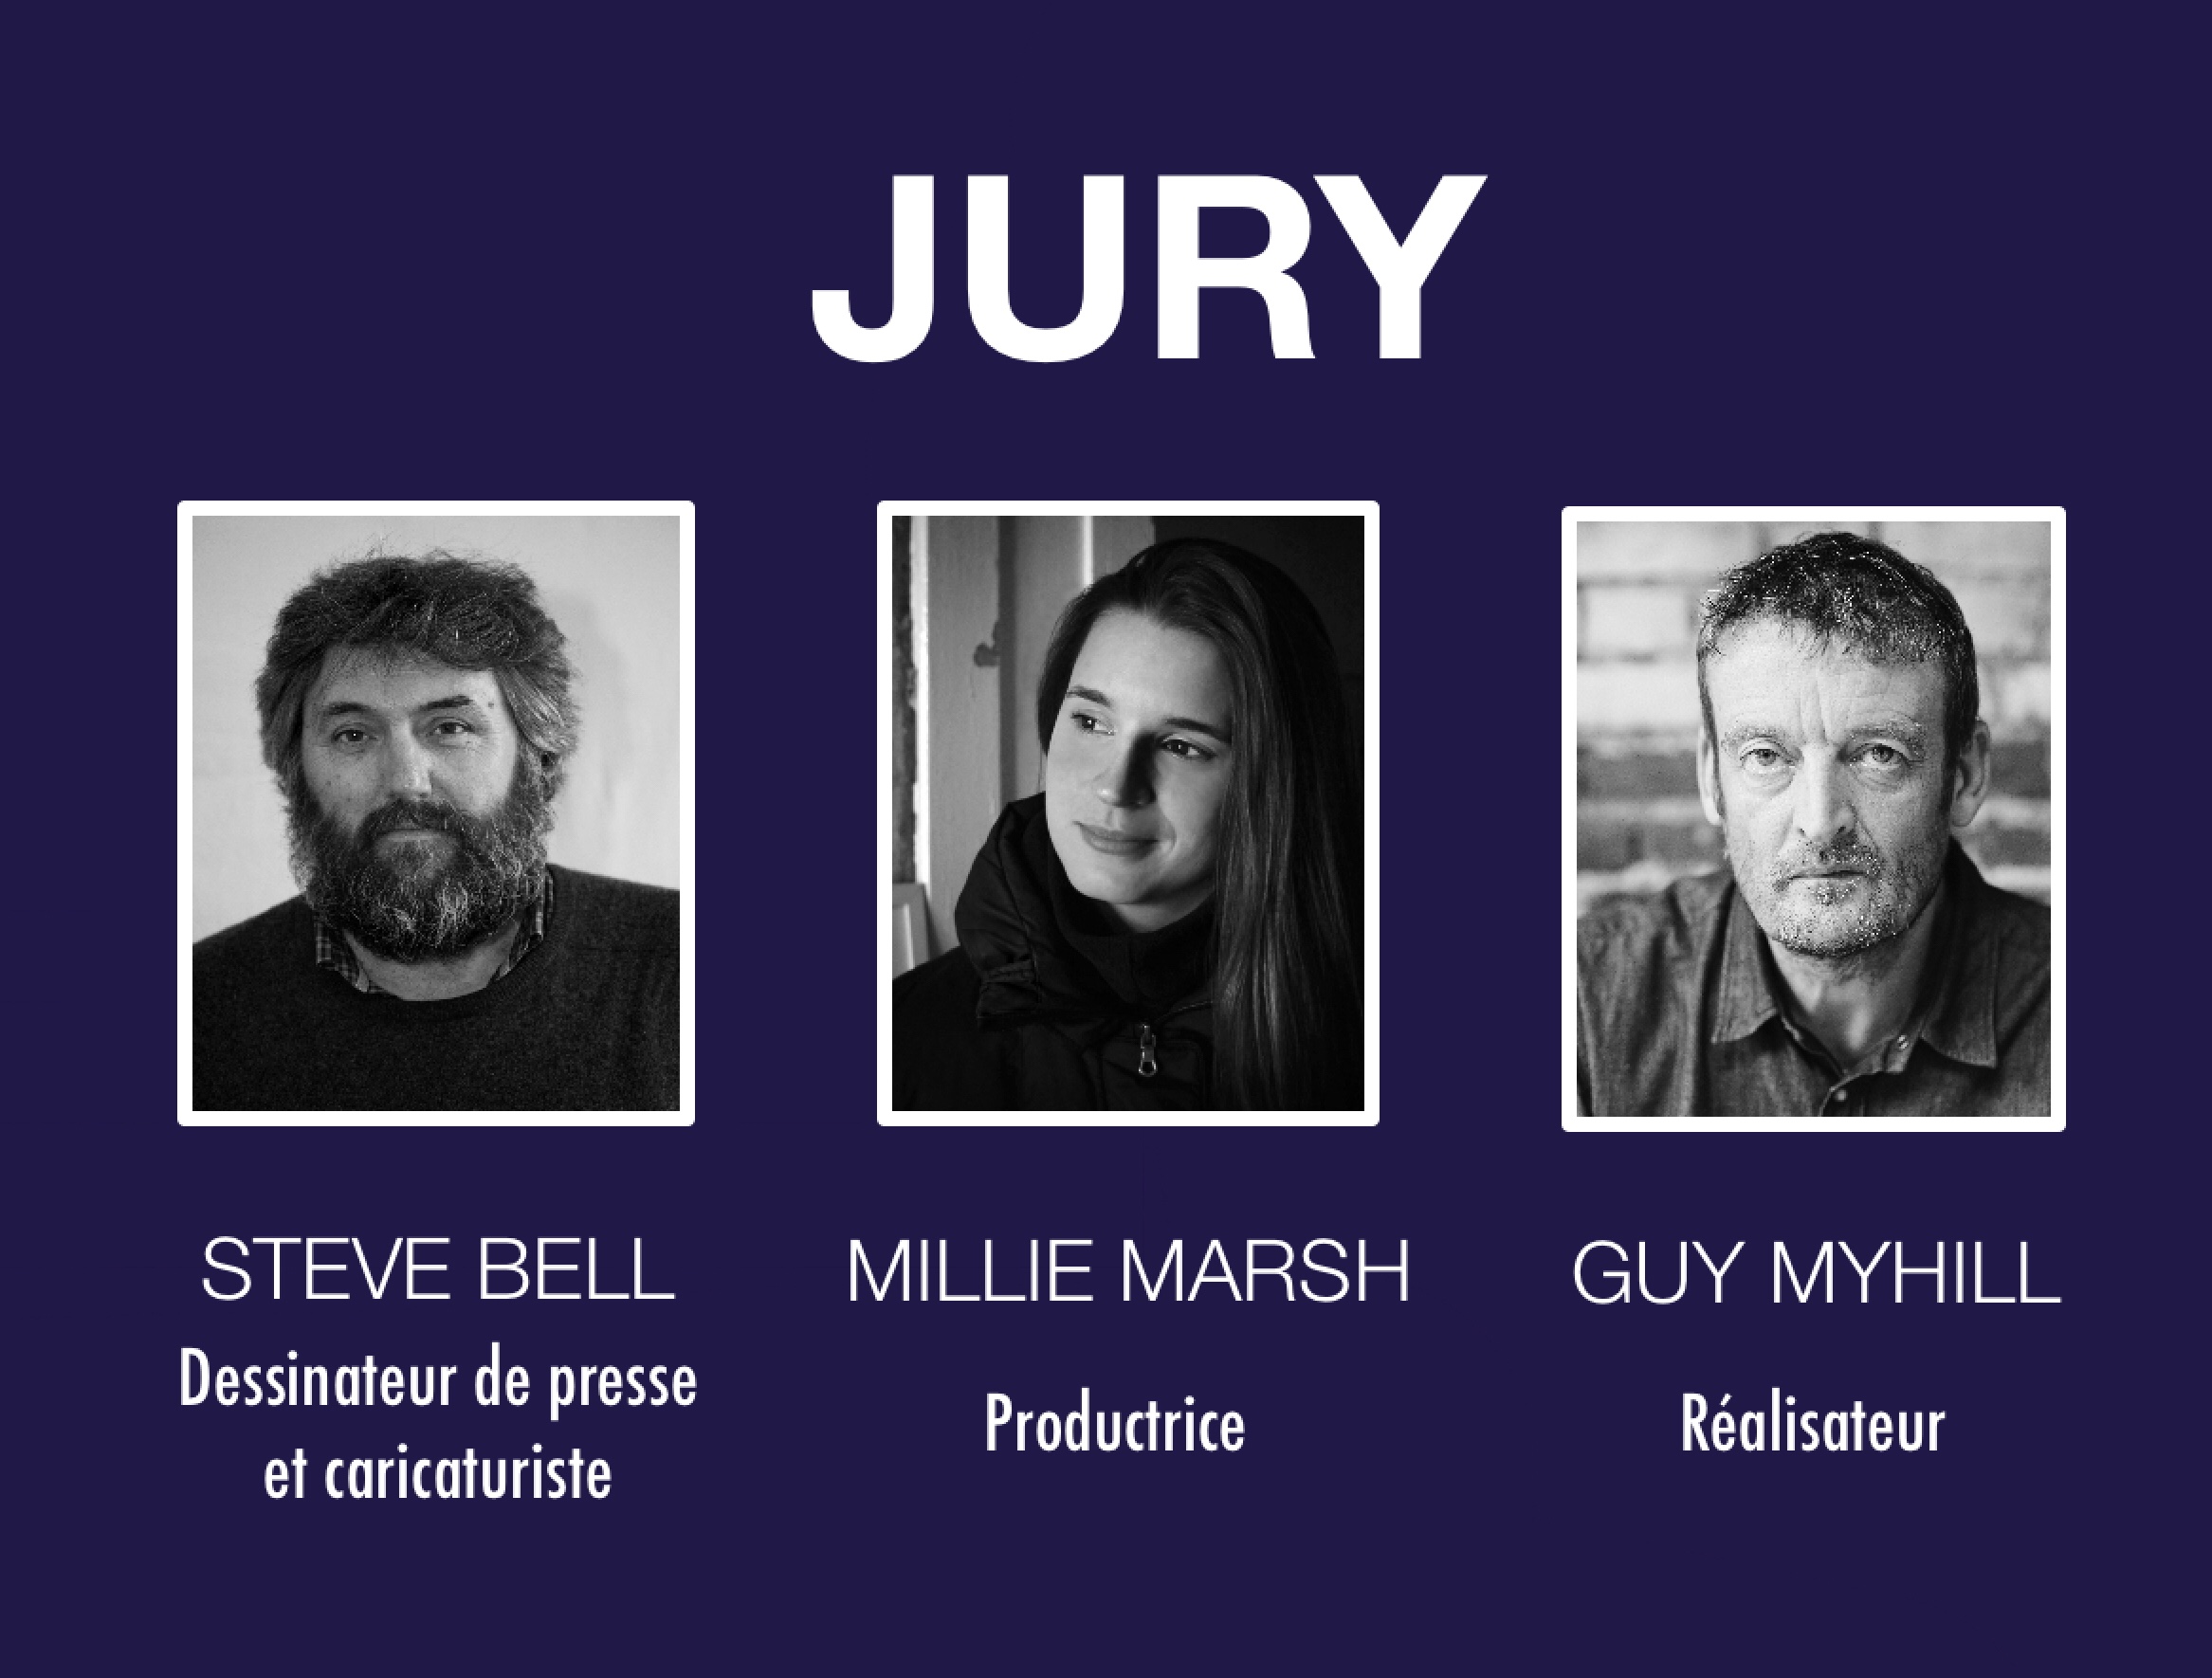 A Very British Jury 